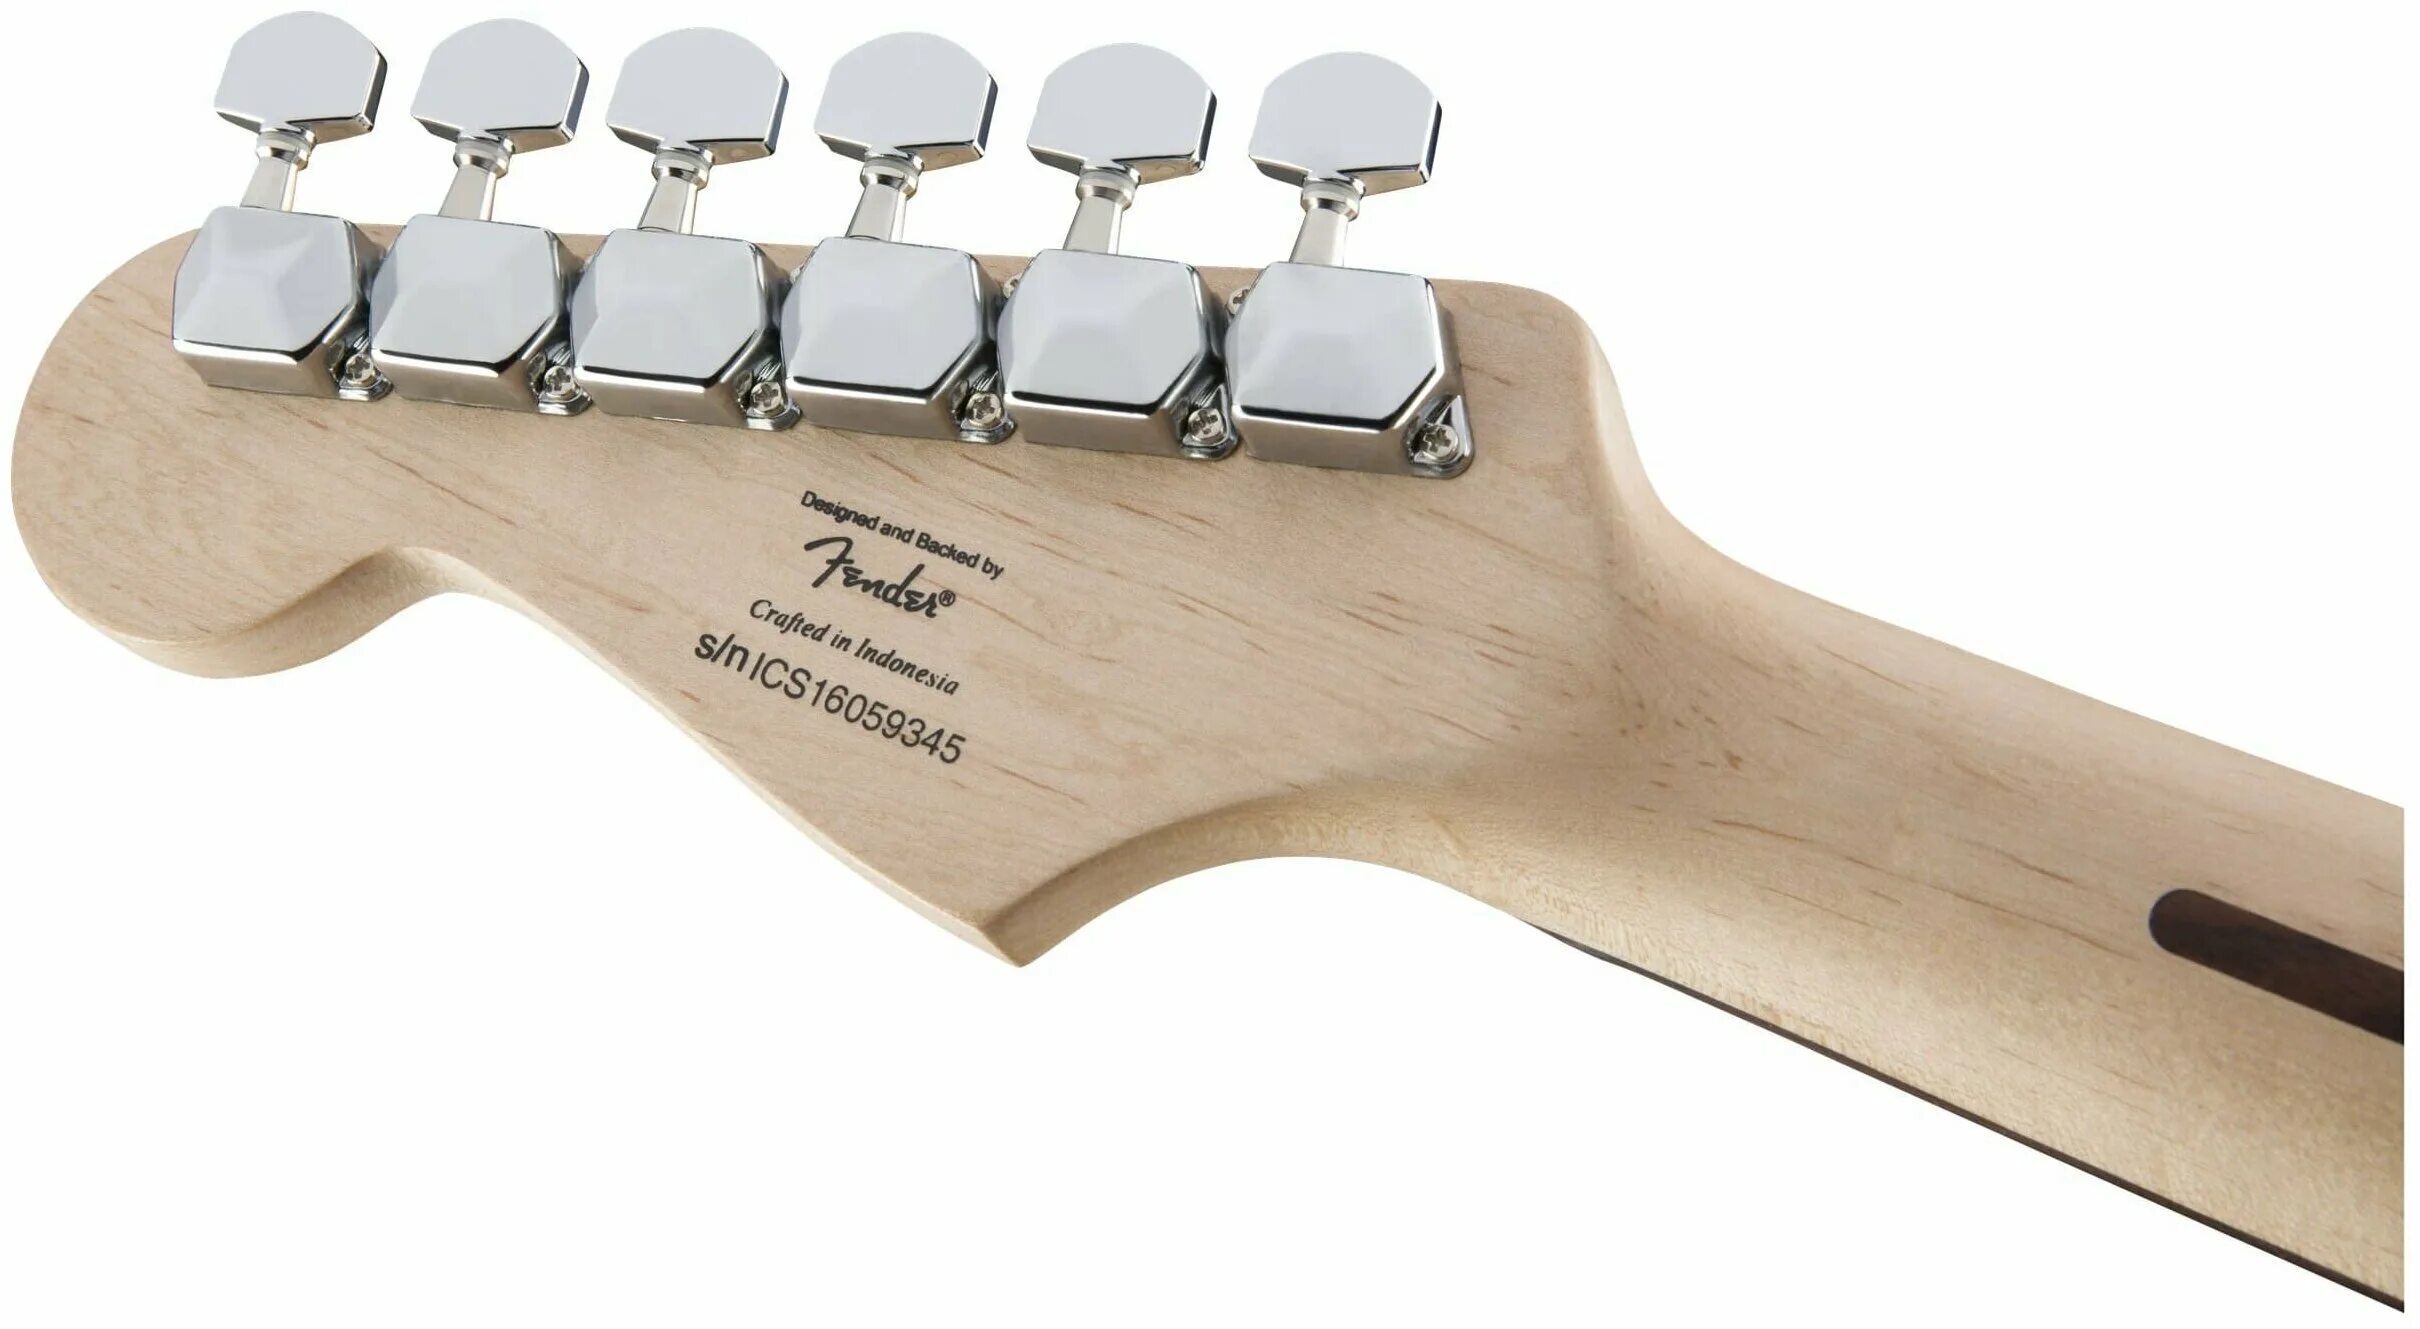 Squier stratocaster hss. Электрогитара Fender Squier Stratocaster. Электрогитара Fender Squier Bullet. Гитара Squier by Fender. Электрогитара Fender Bullet Stratocaster HT.